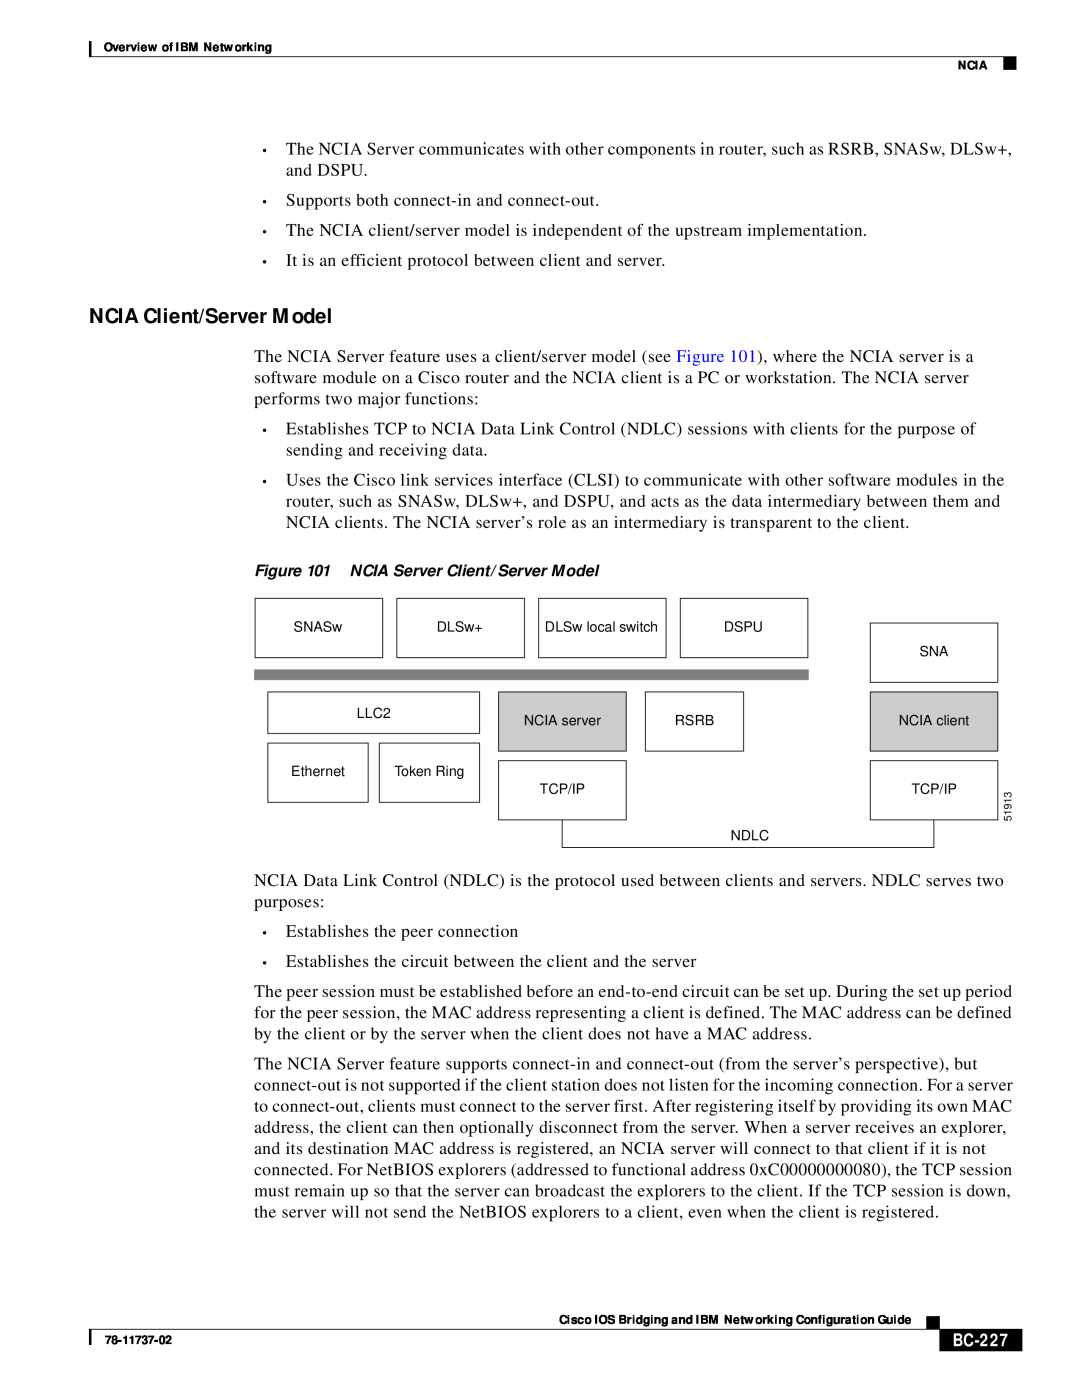 IBM BC-201 manual NCIA Client/Server Model, BC-227 